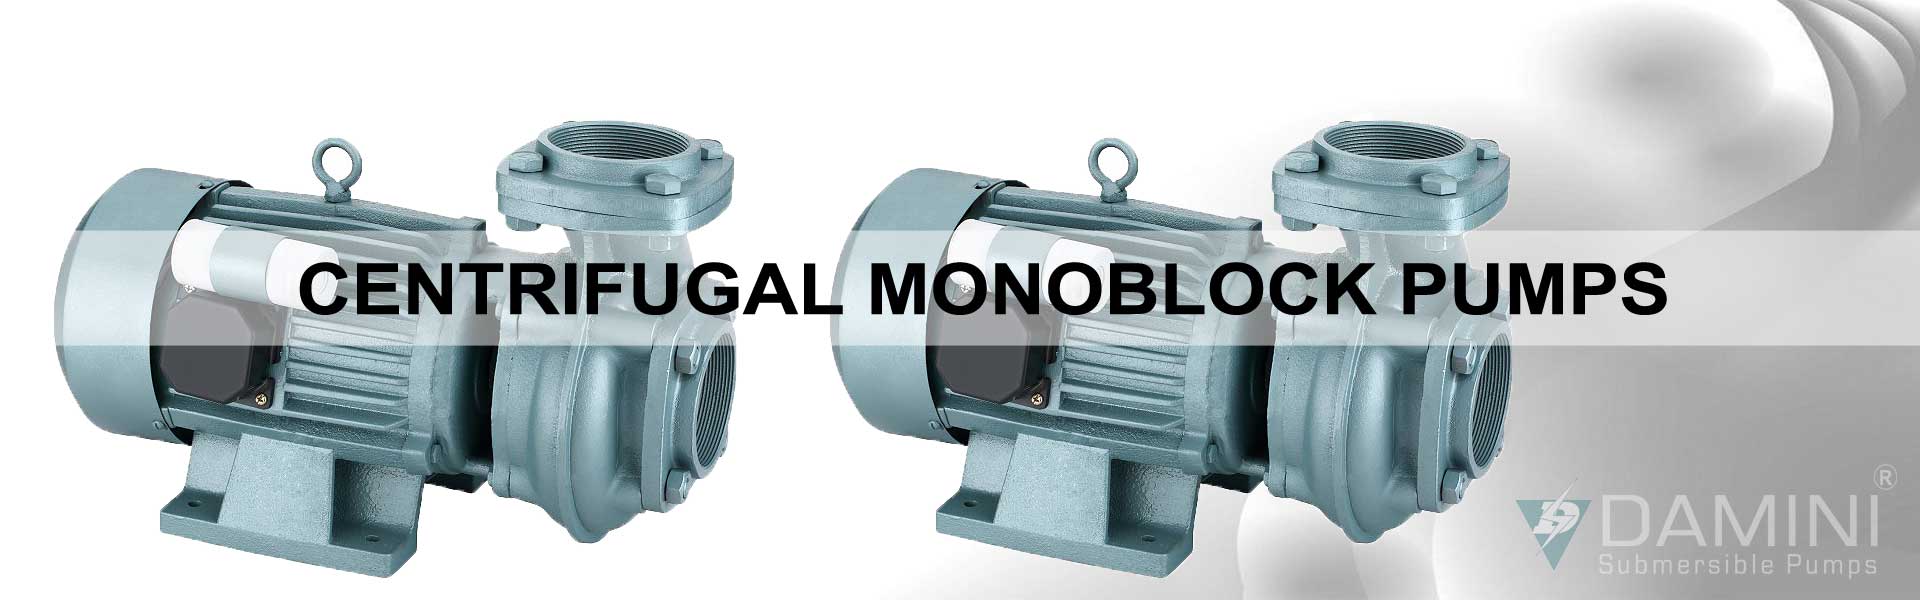 Centrifugal Monoblock Pumps